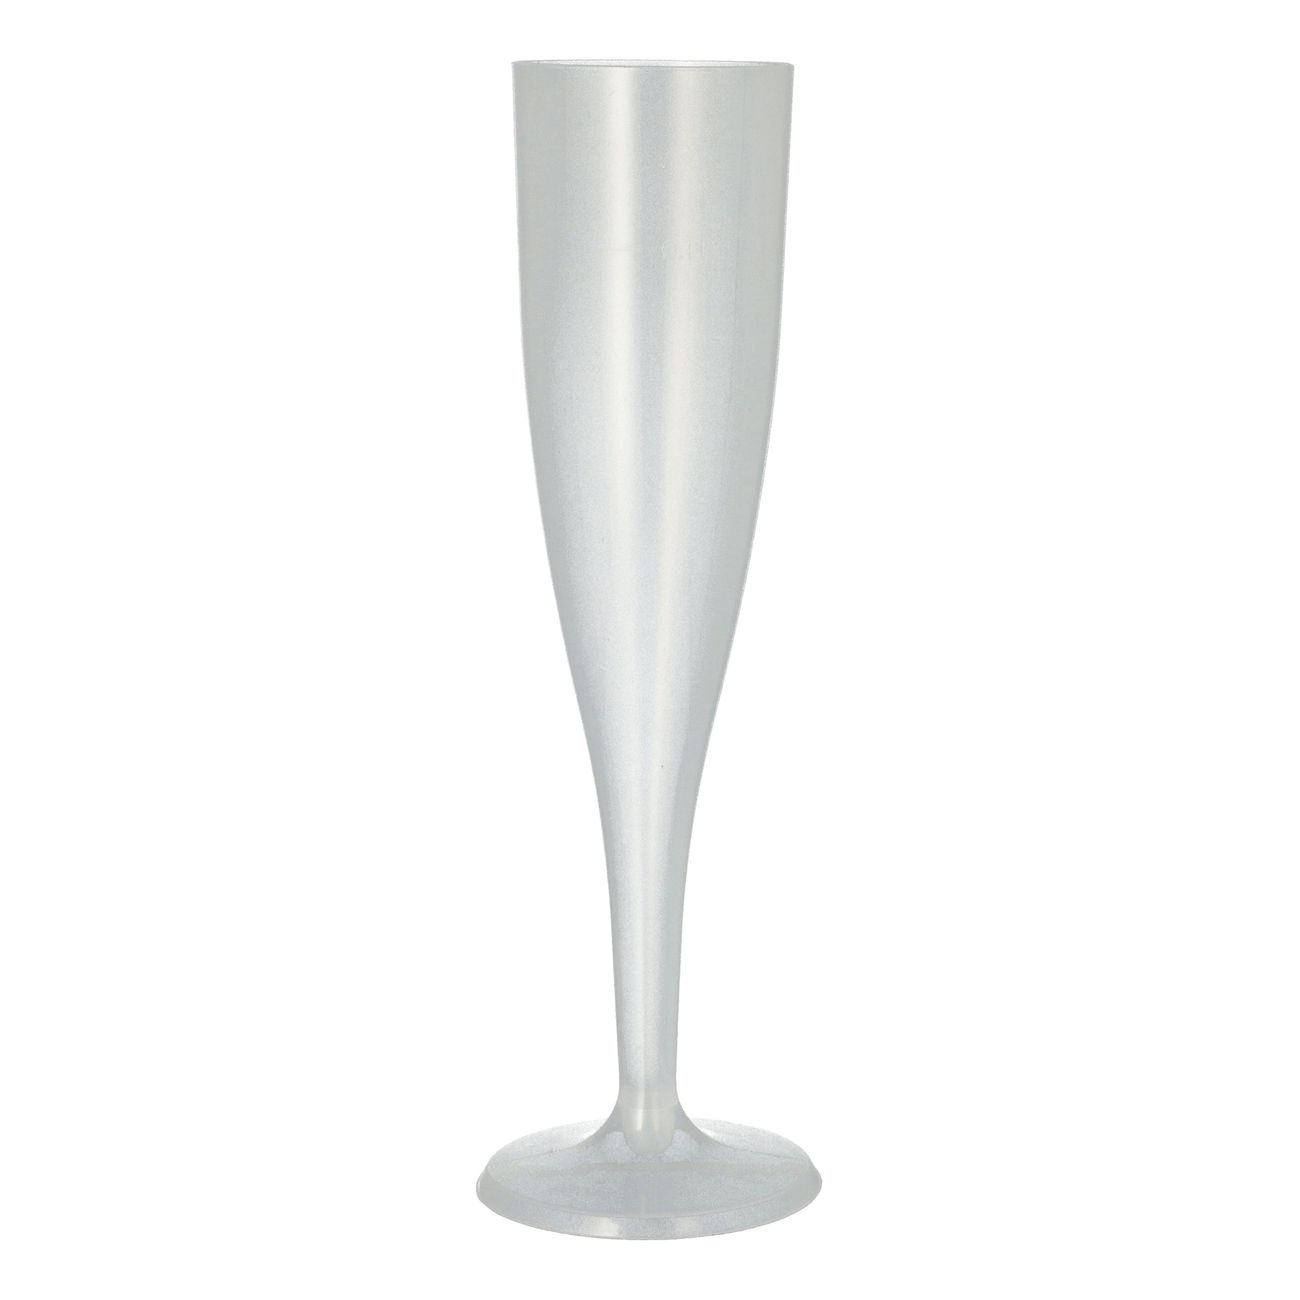 ateranvandbara-champagneglas-101081-1